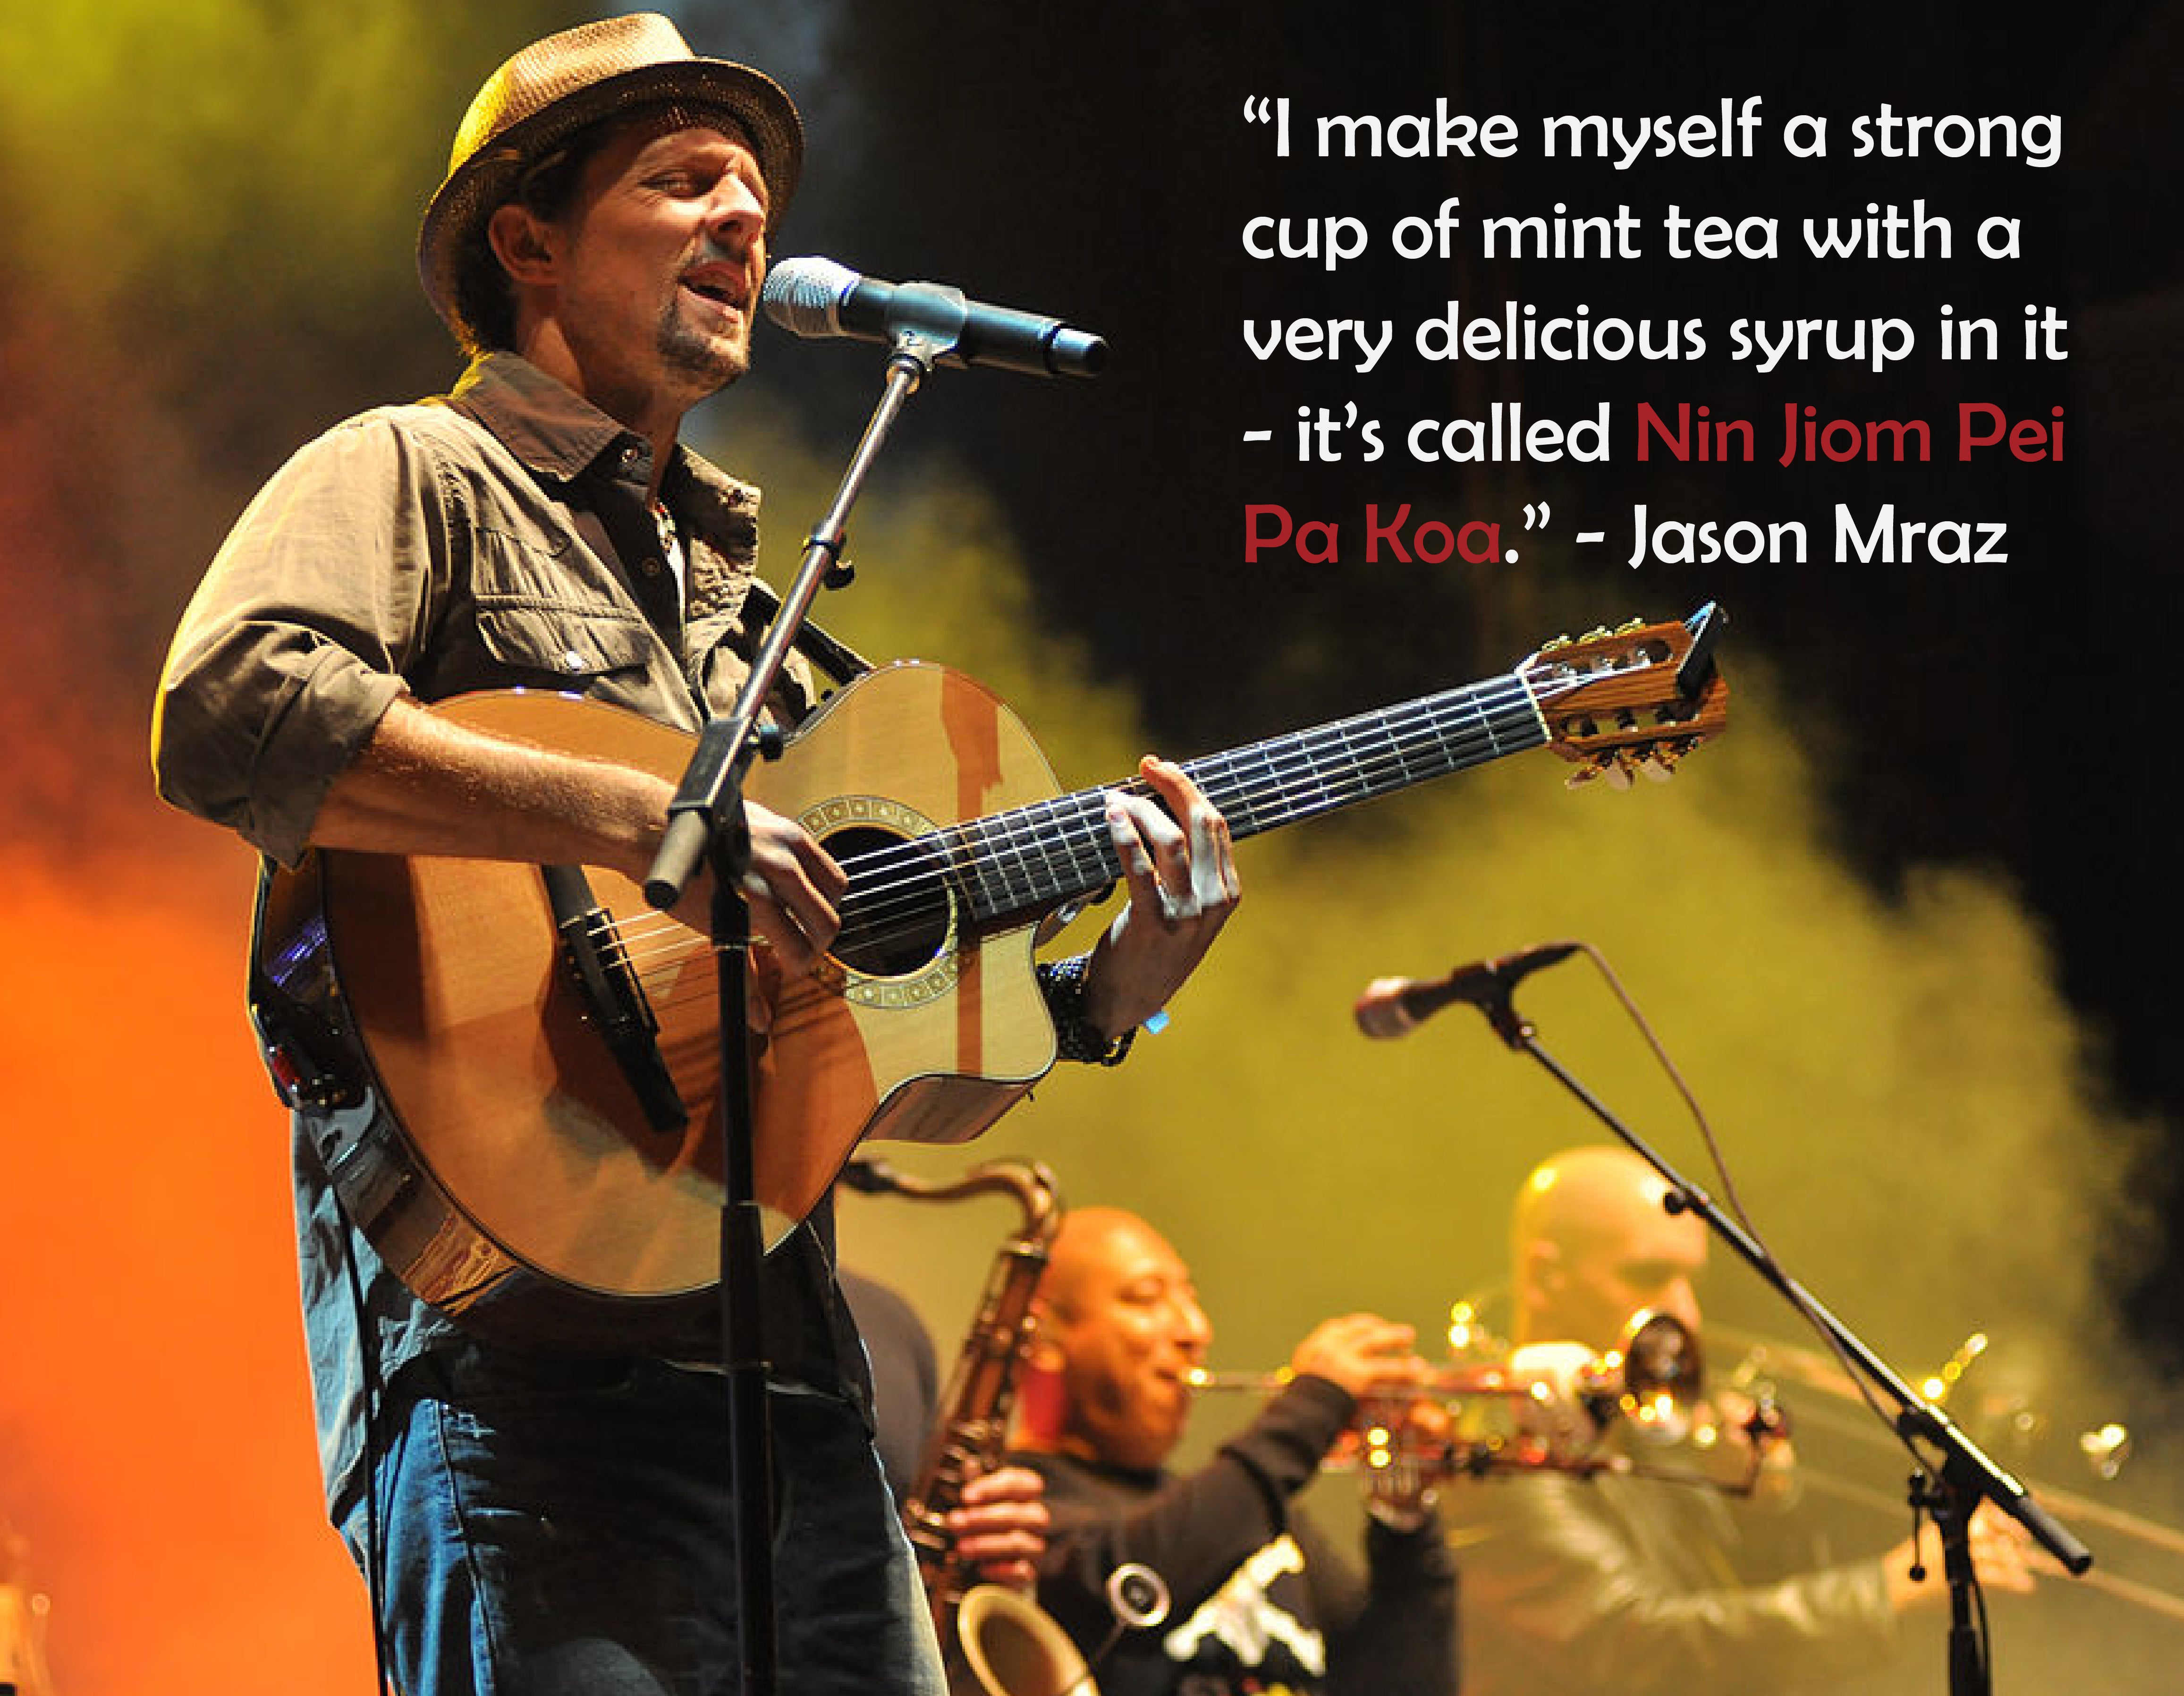 Grammy-Preisträger Jason Mraz wärmt sich mit Nin Jiom Pei Pa Koa auf